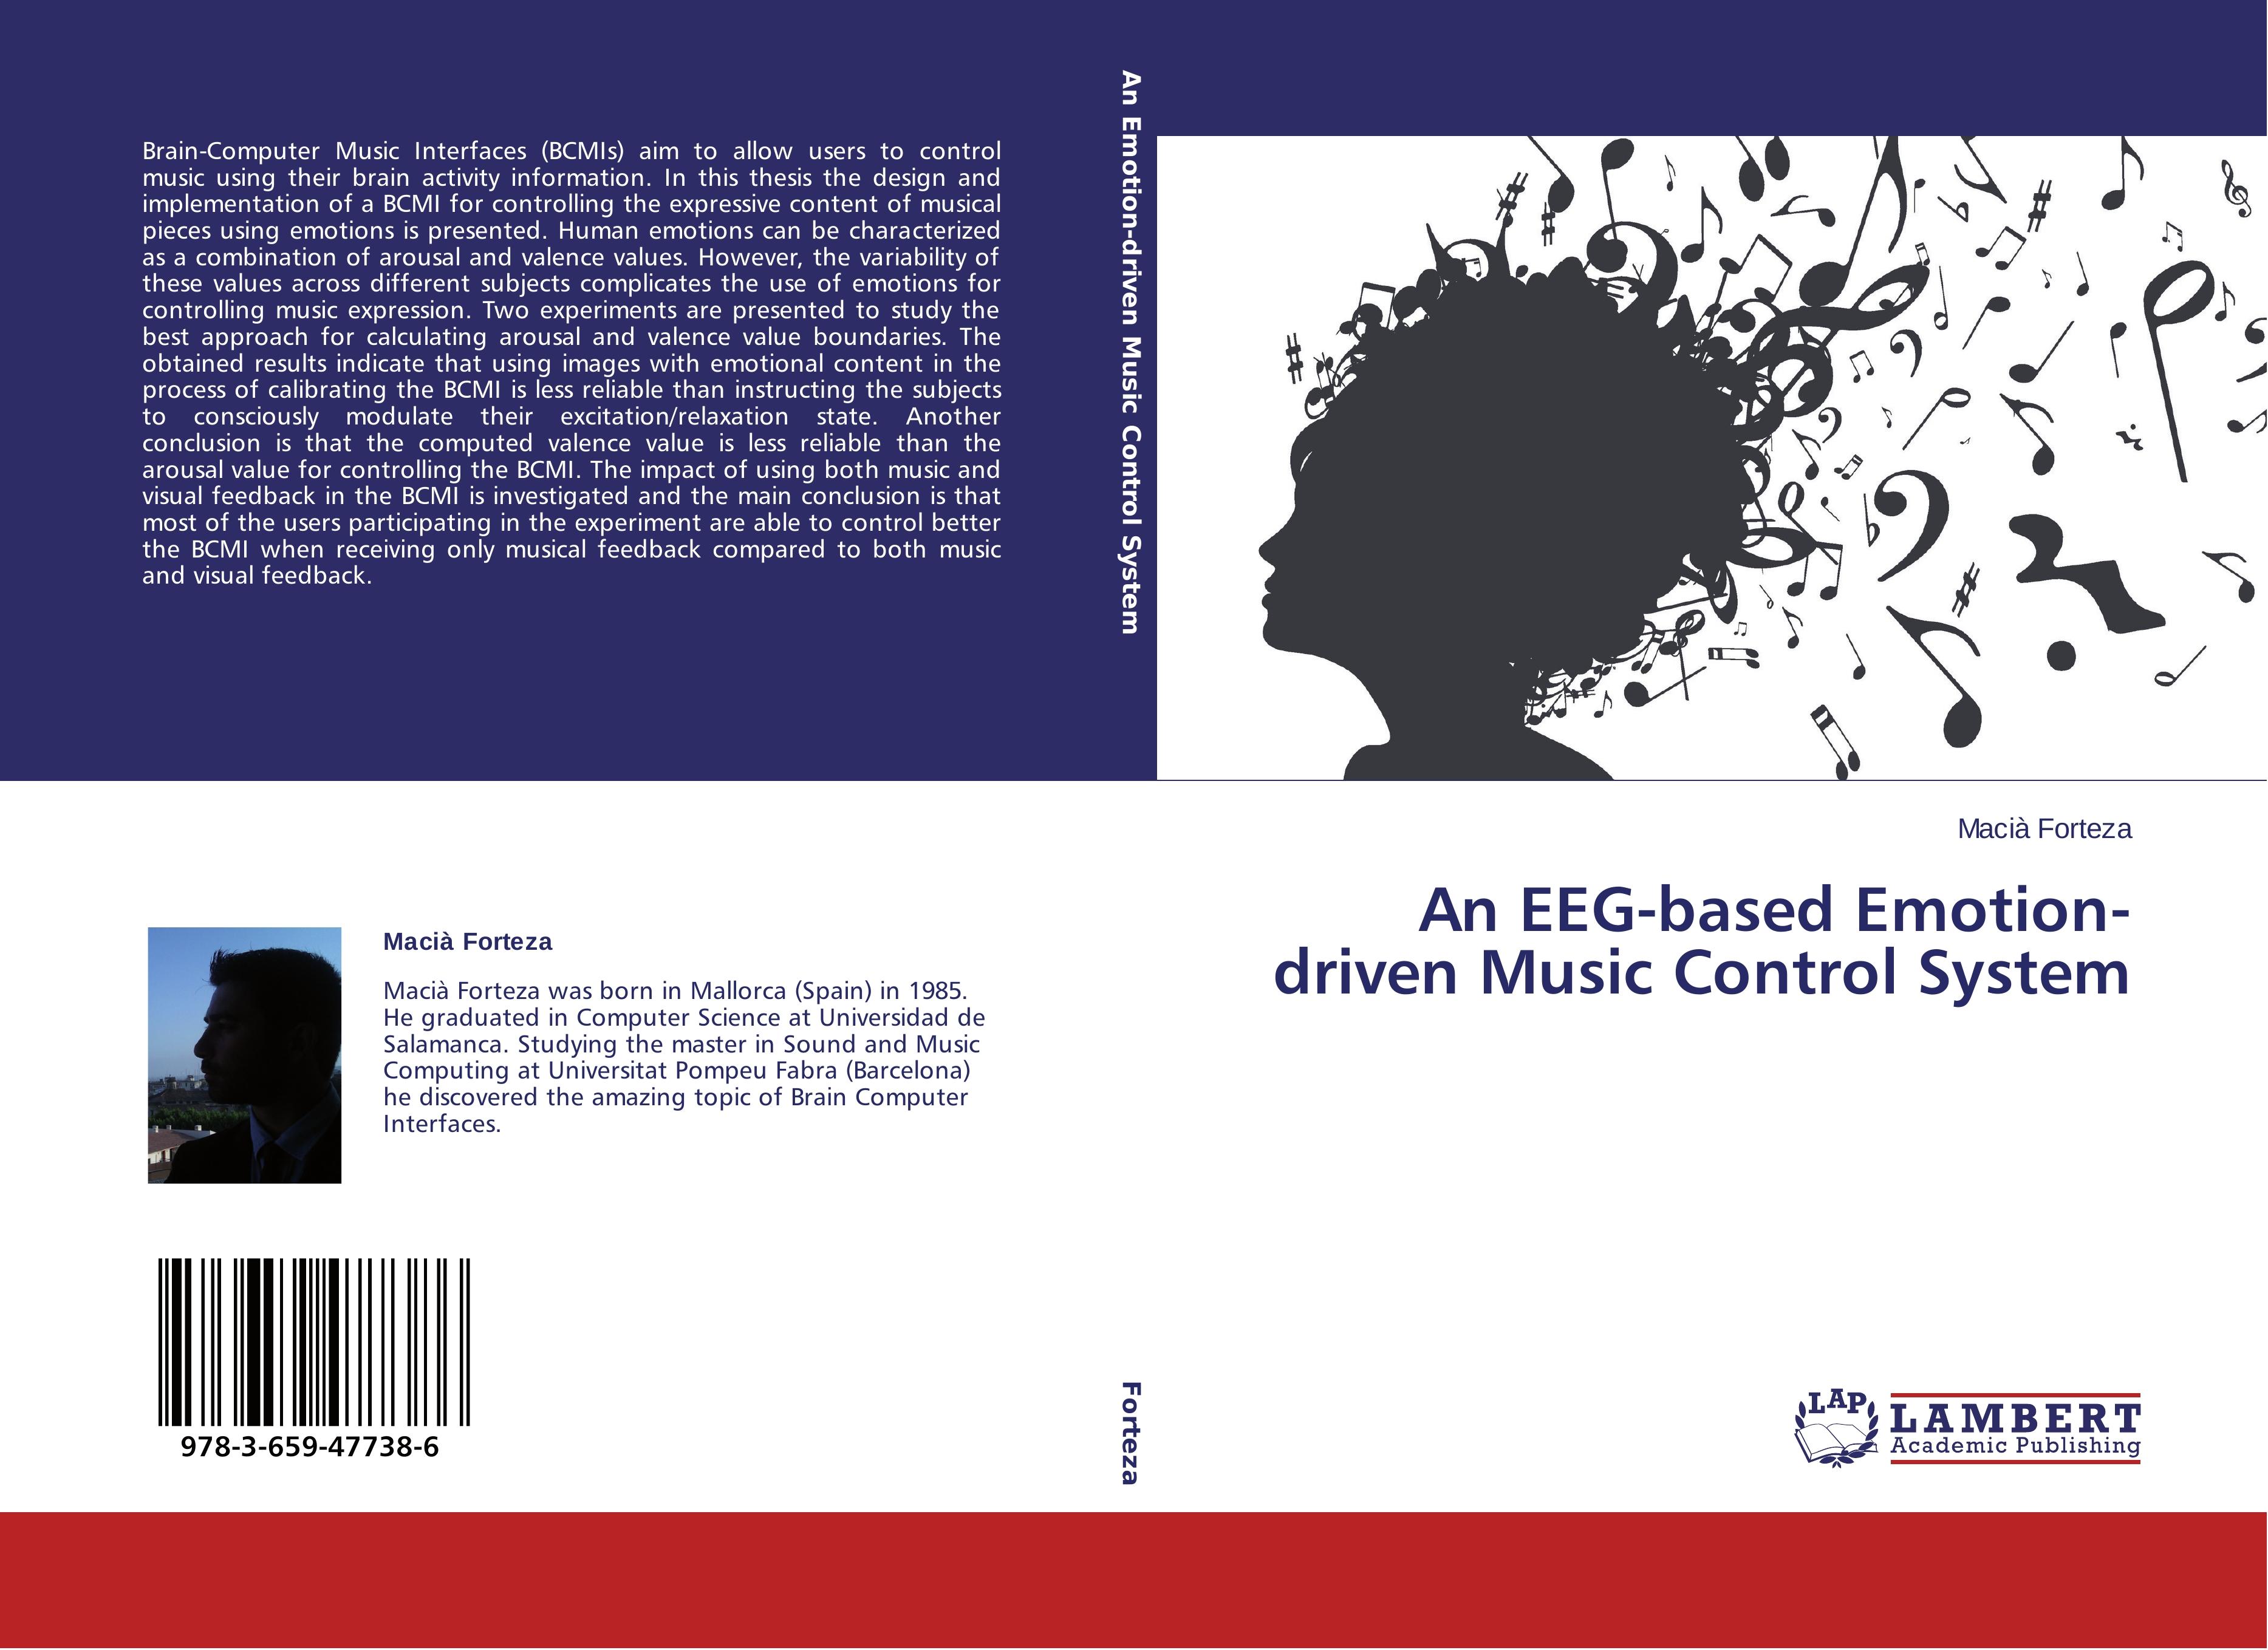 An EEG-based Emotion-driven Music Control System - Macià Forteza